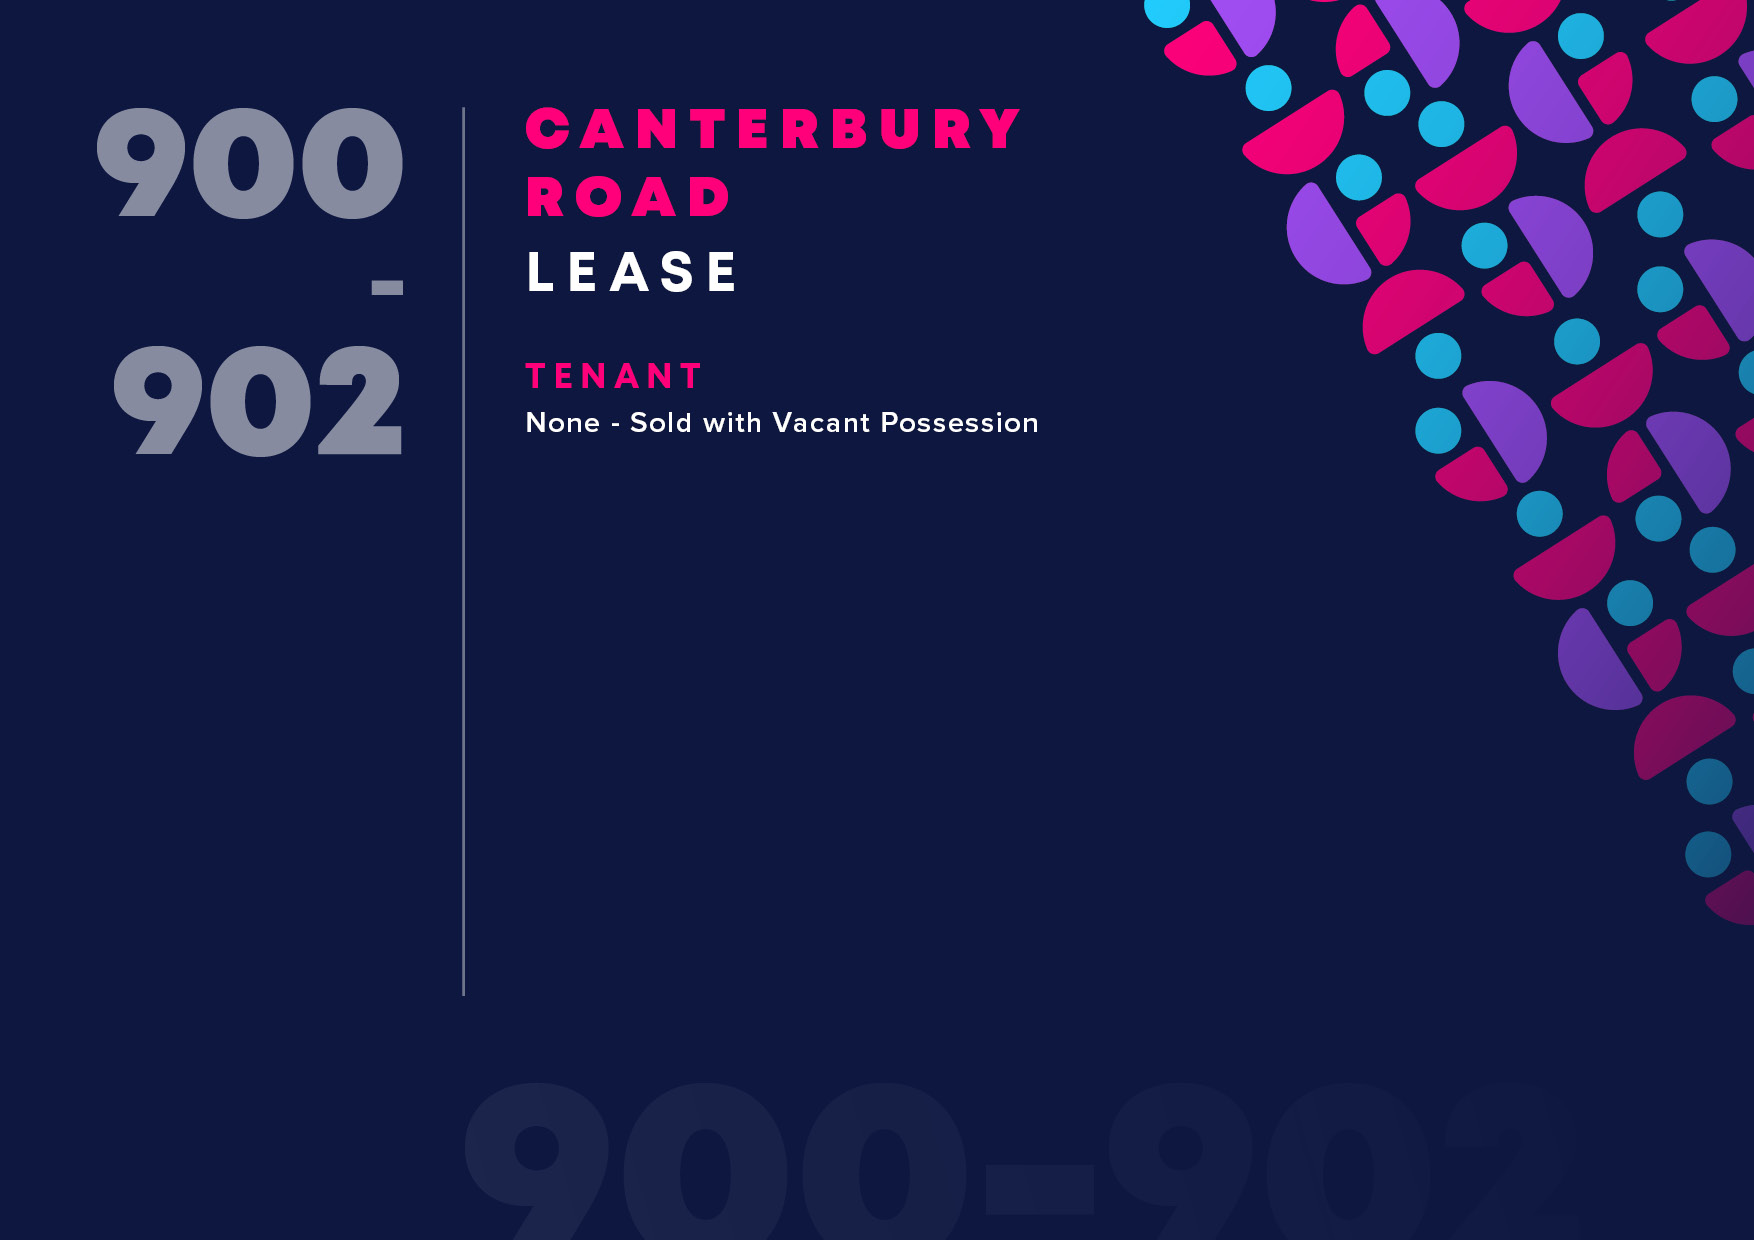 Sale 900-902 Canterbury Road Box Hill Development Commercial Real Estate